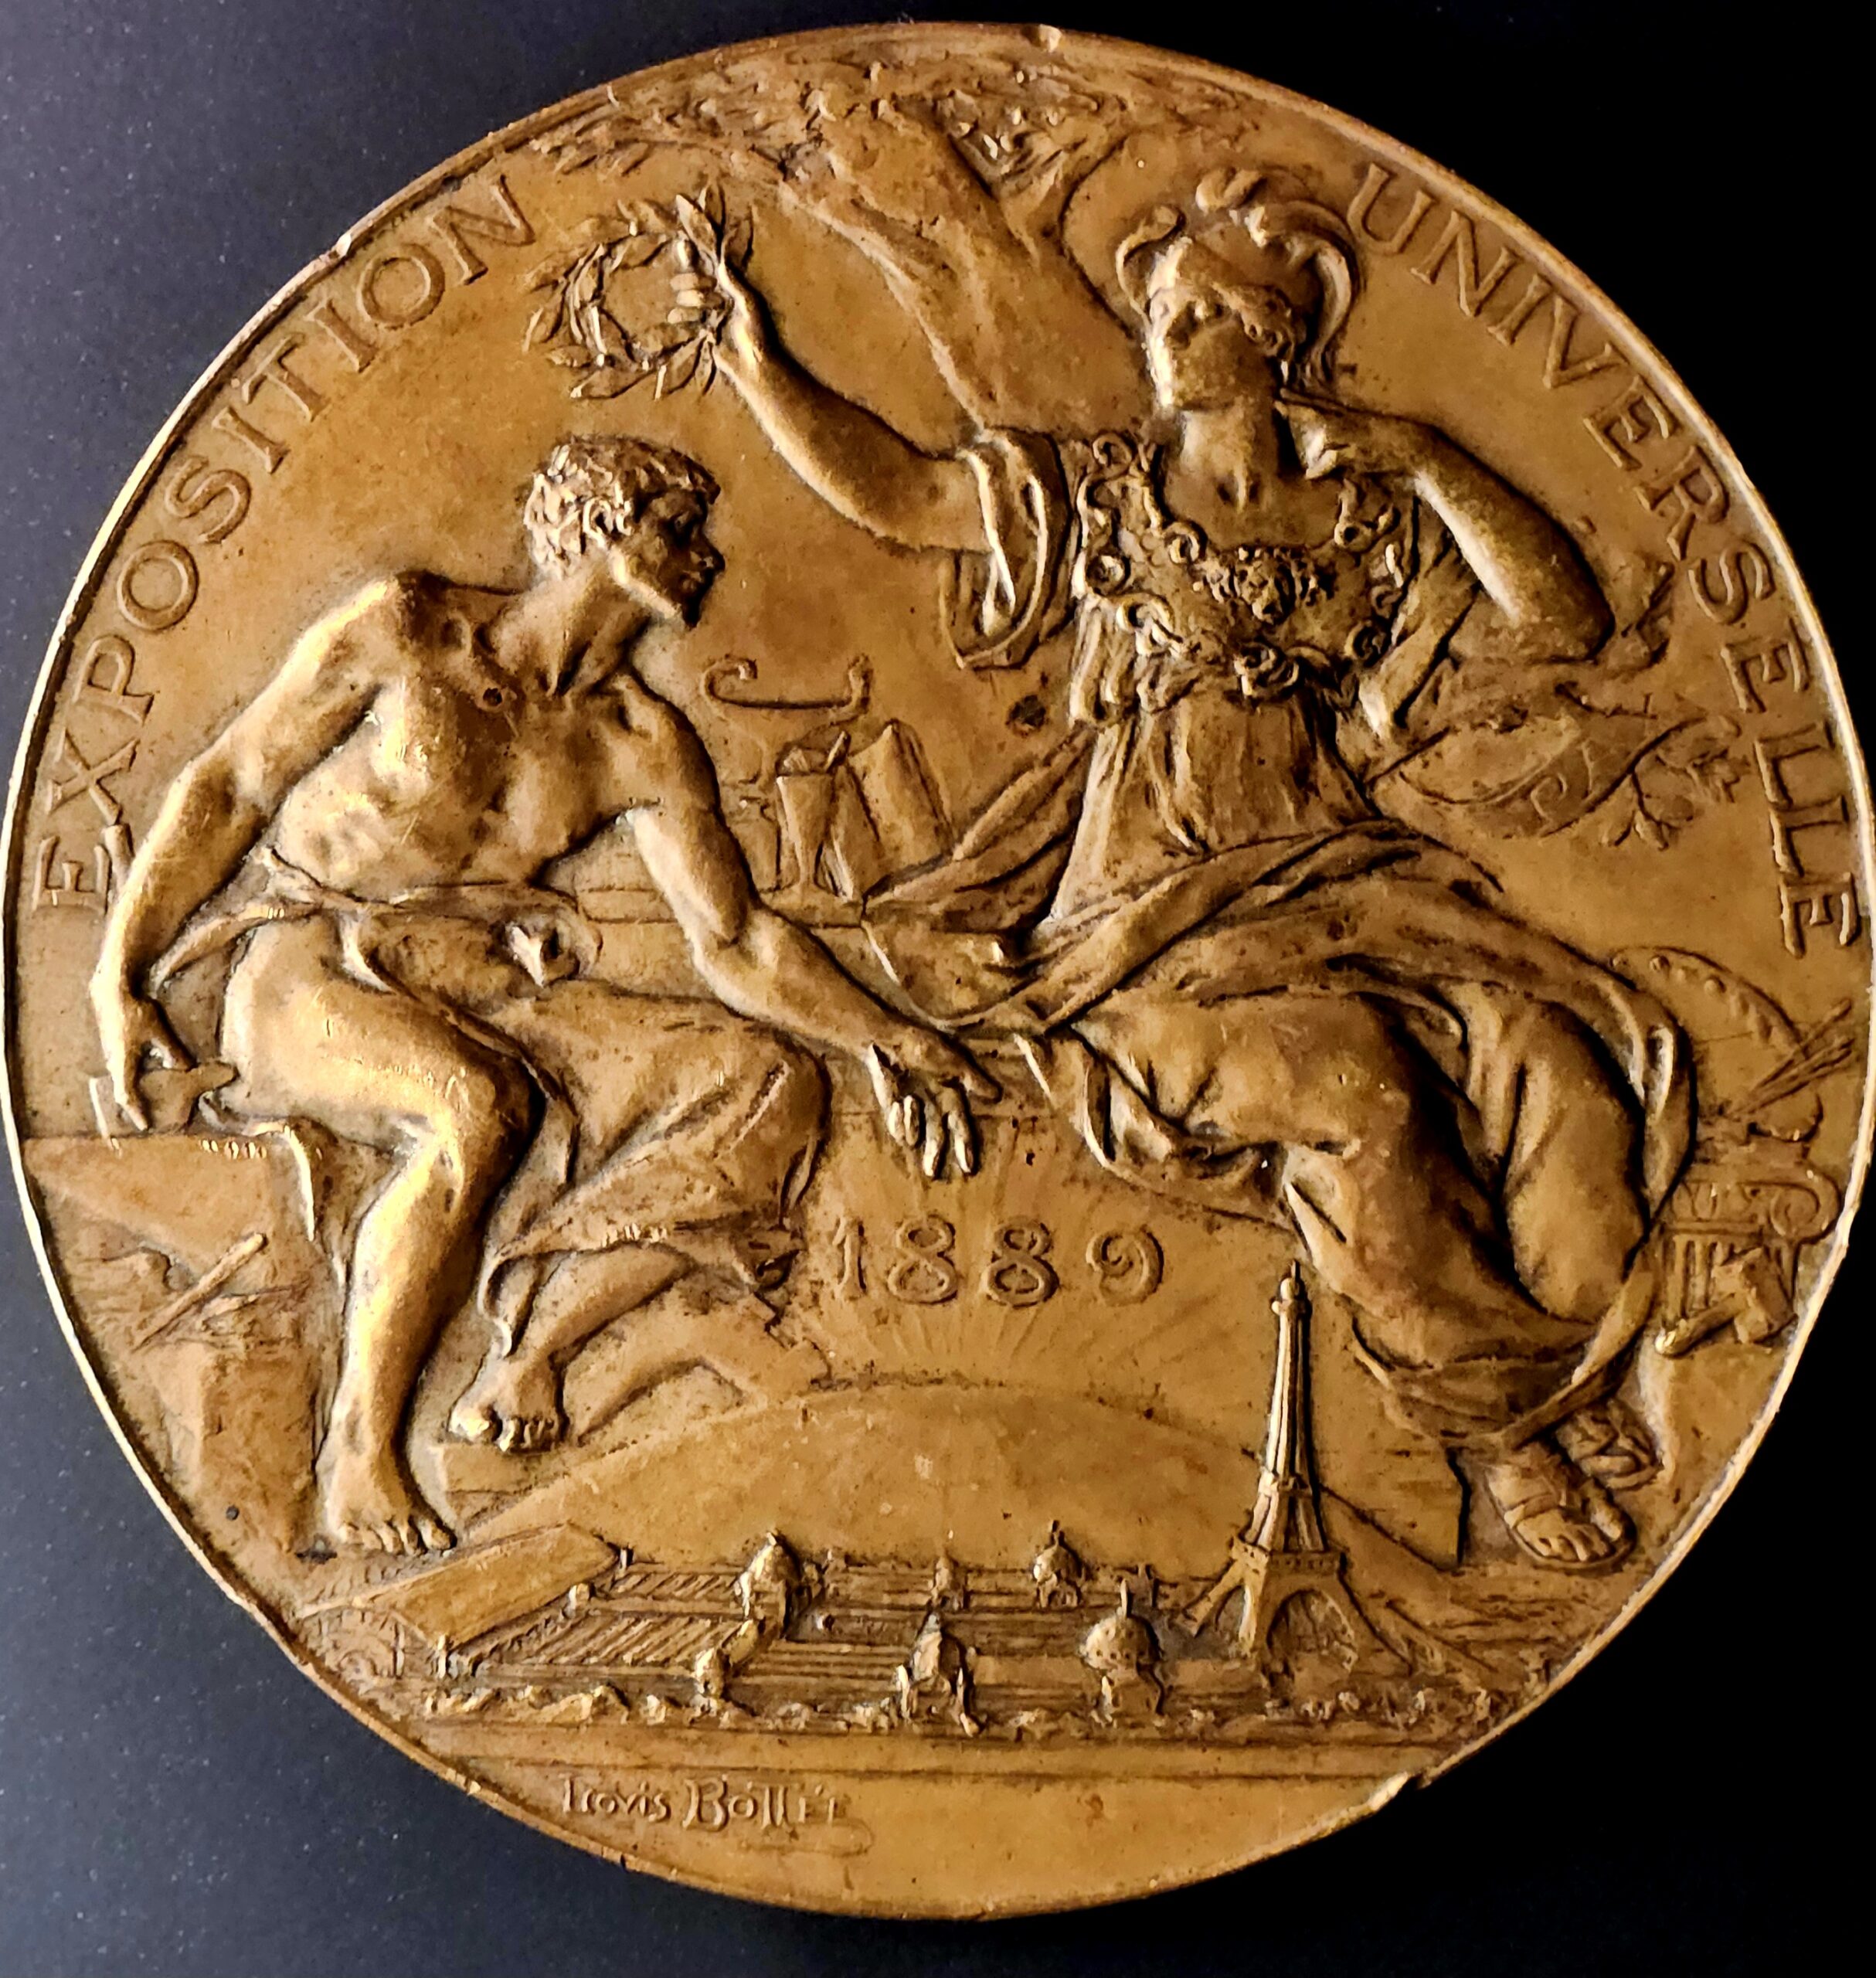 award medal 1889 Paris Exposition